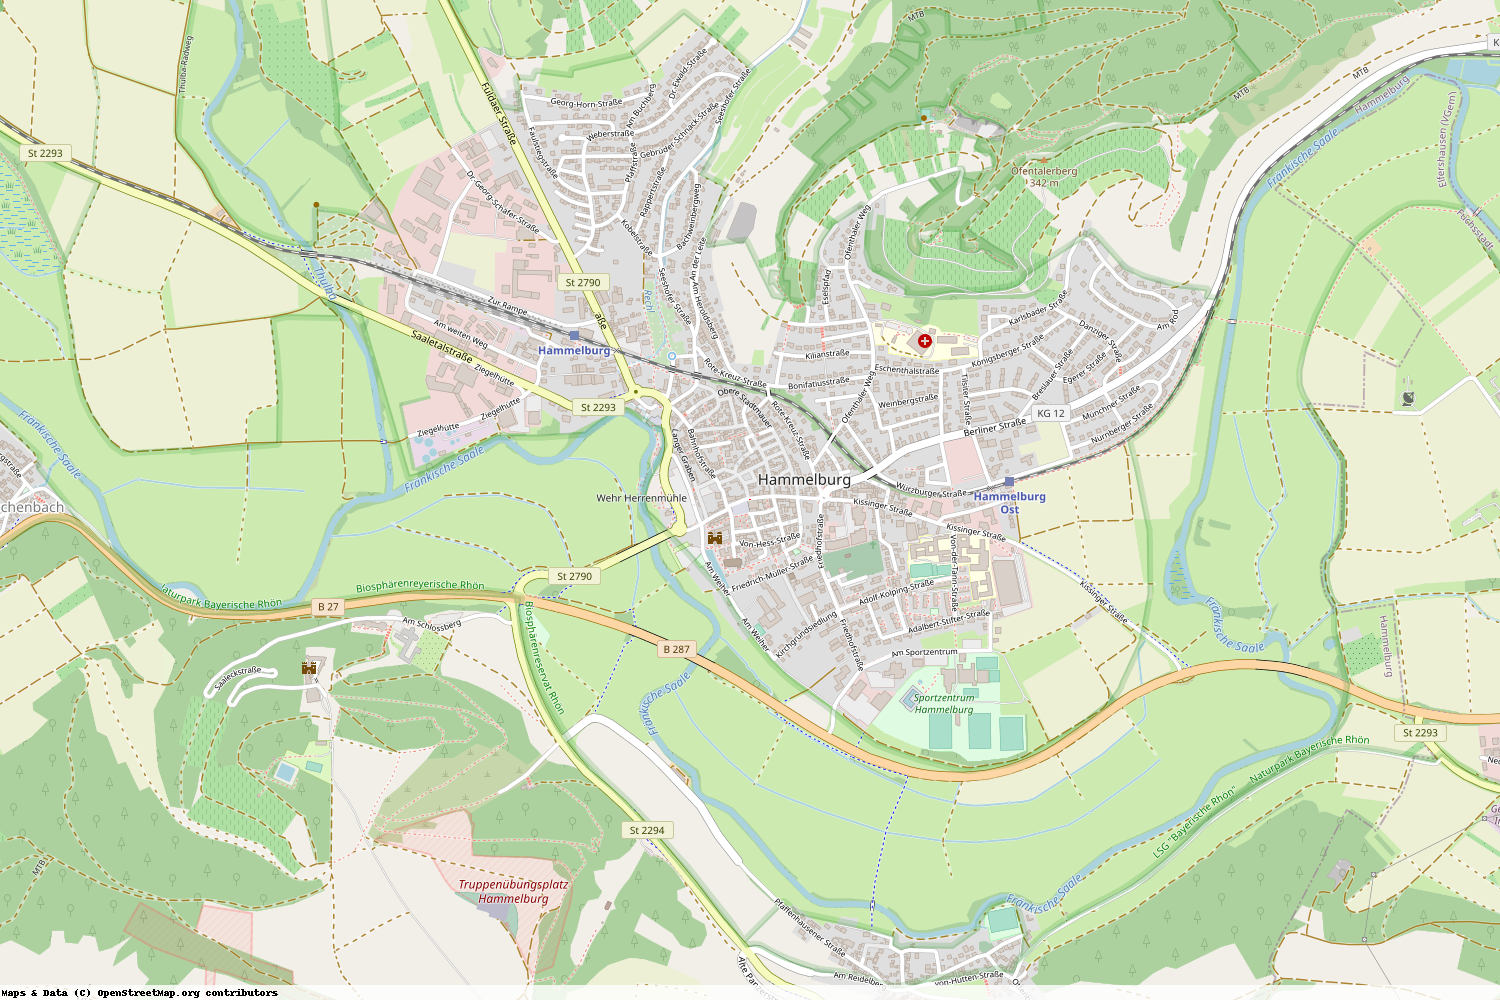 Ist gerade Stromausfall in Bayern - Bad Kissingen - Hammelburg?